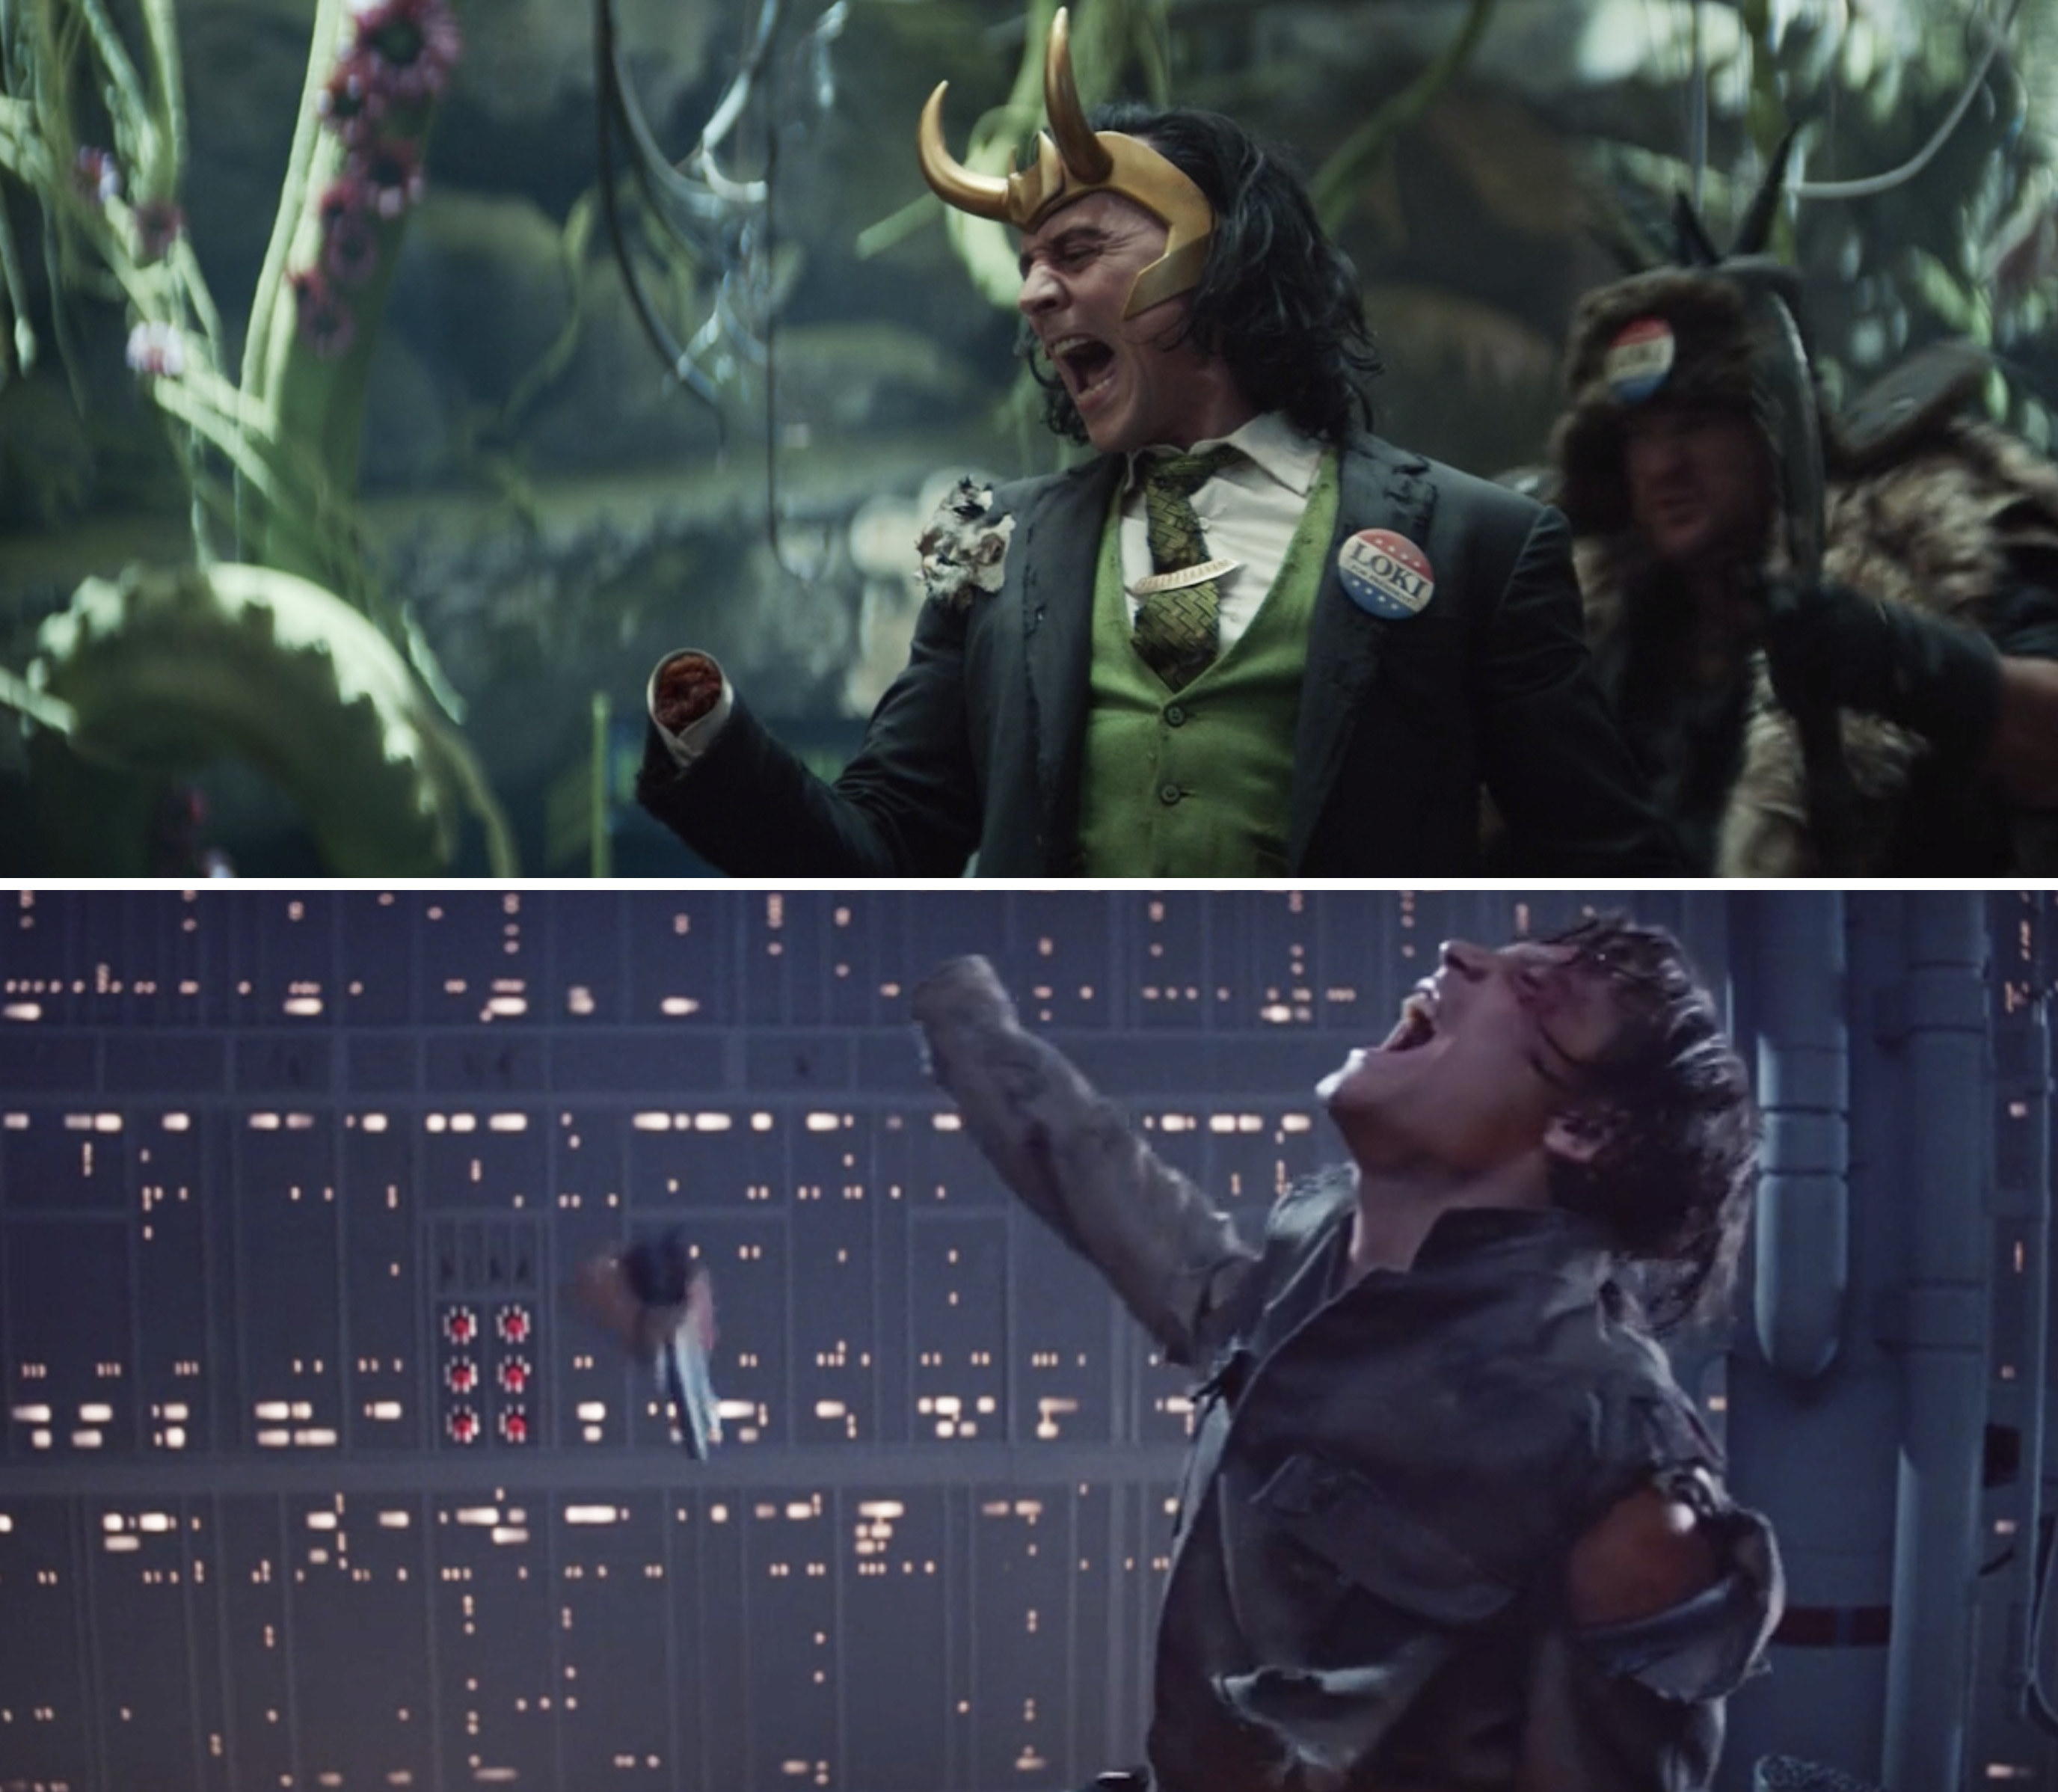 President Loki screaming after his hand is cut off vs. Luke Skywalker doing the same